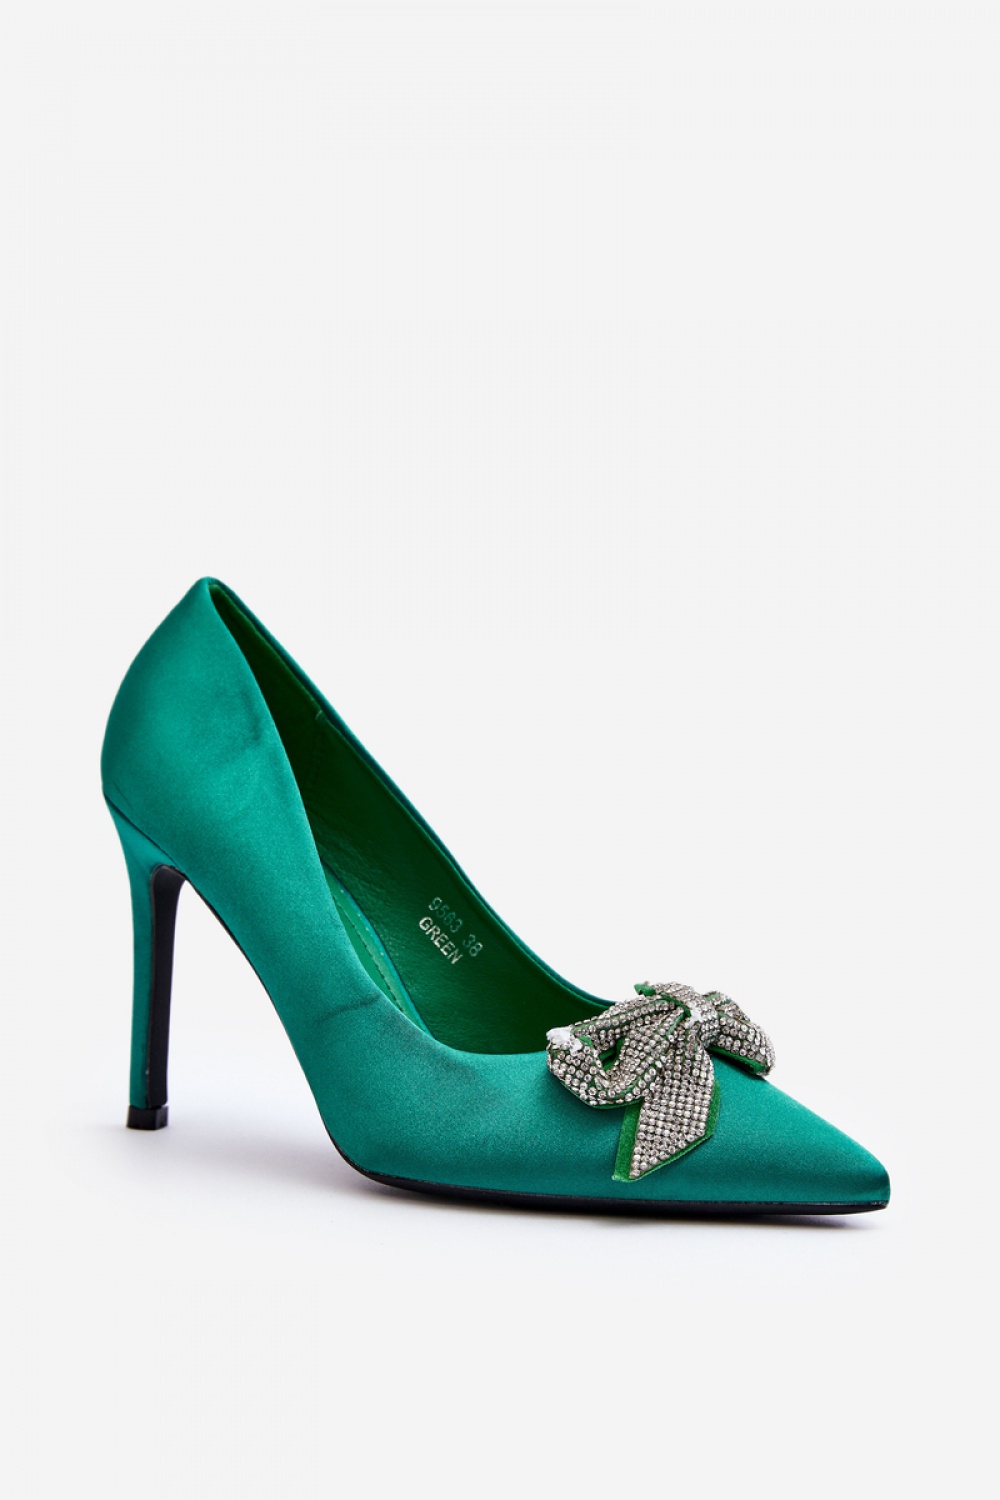 High heels model 191204 Step i..